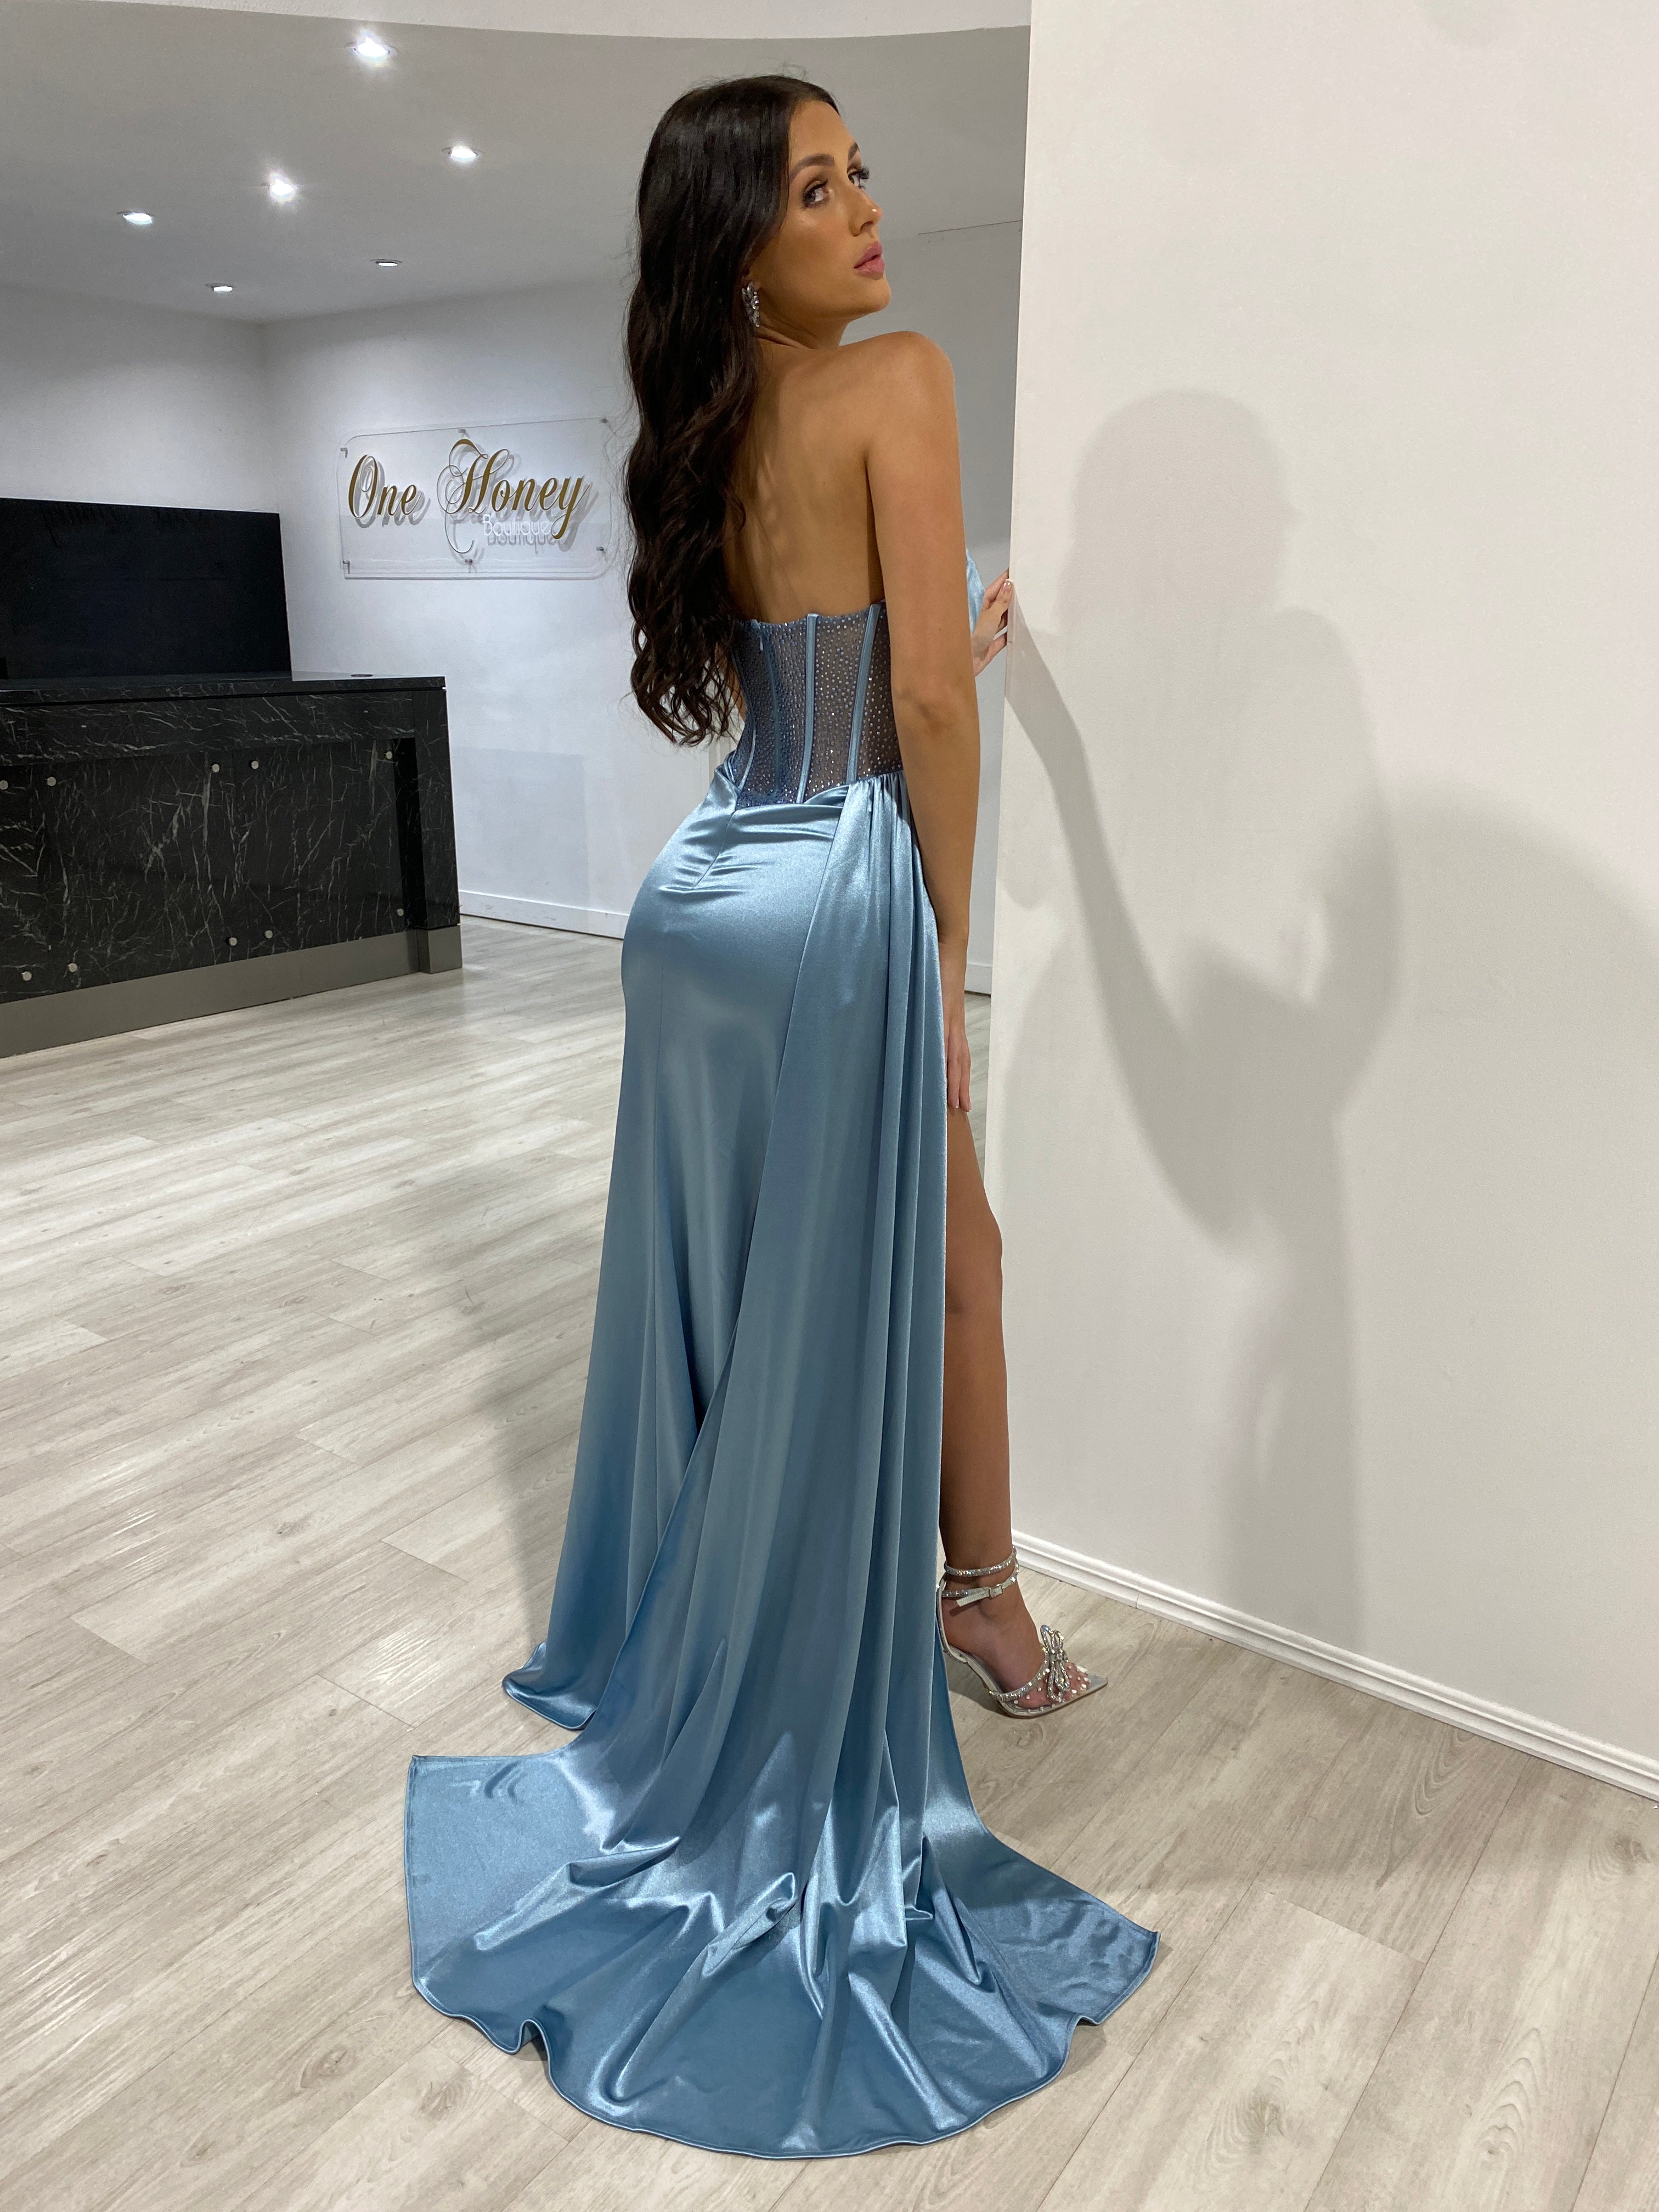 Honey Couture GIGI Dusty Blue Corset Sparkle Bustier Strapless Mermaid Formal Gown Dress